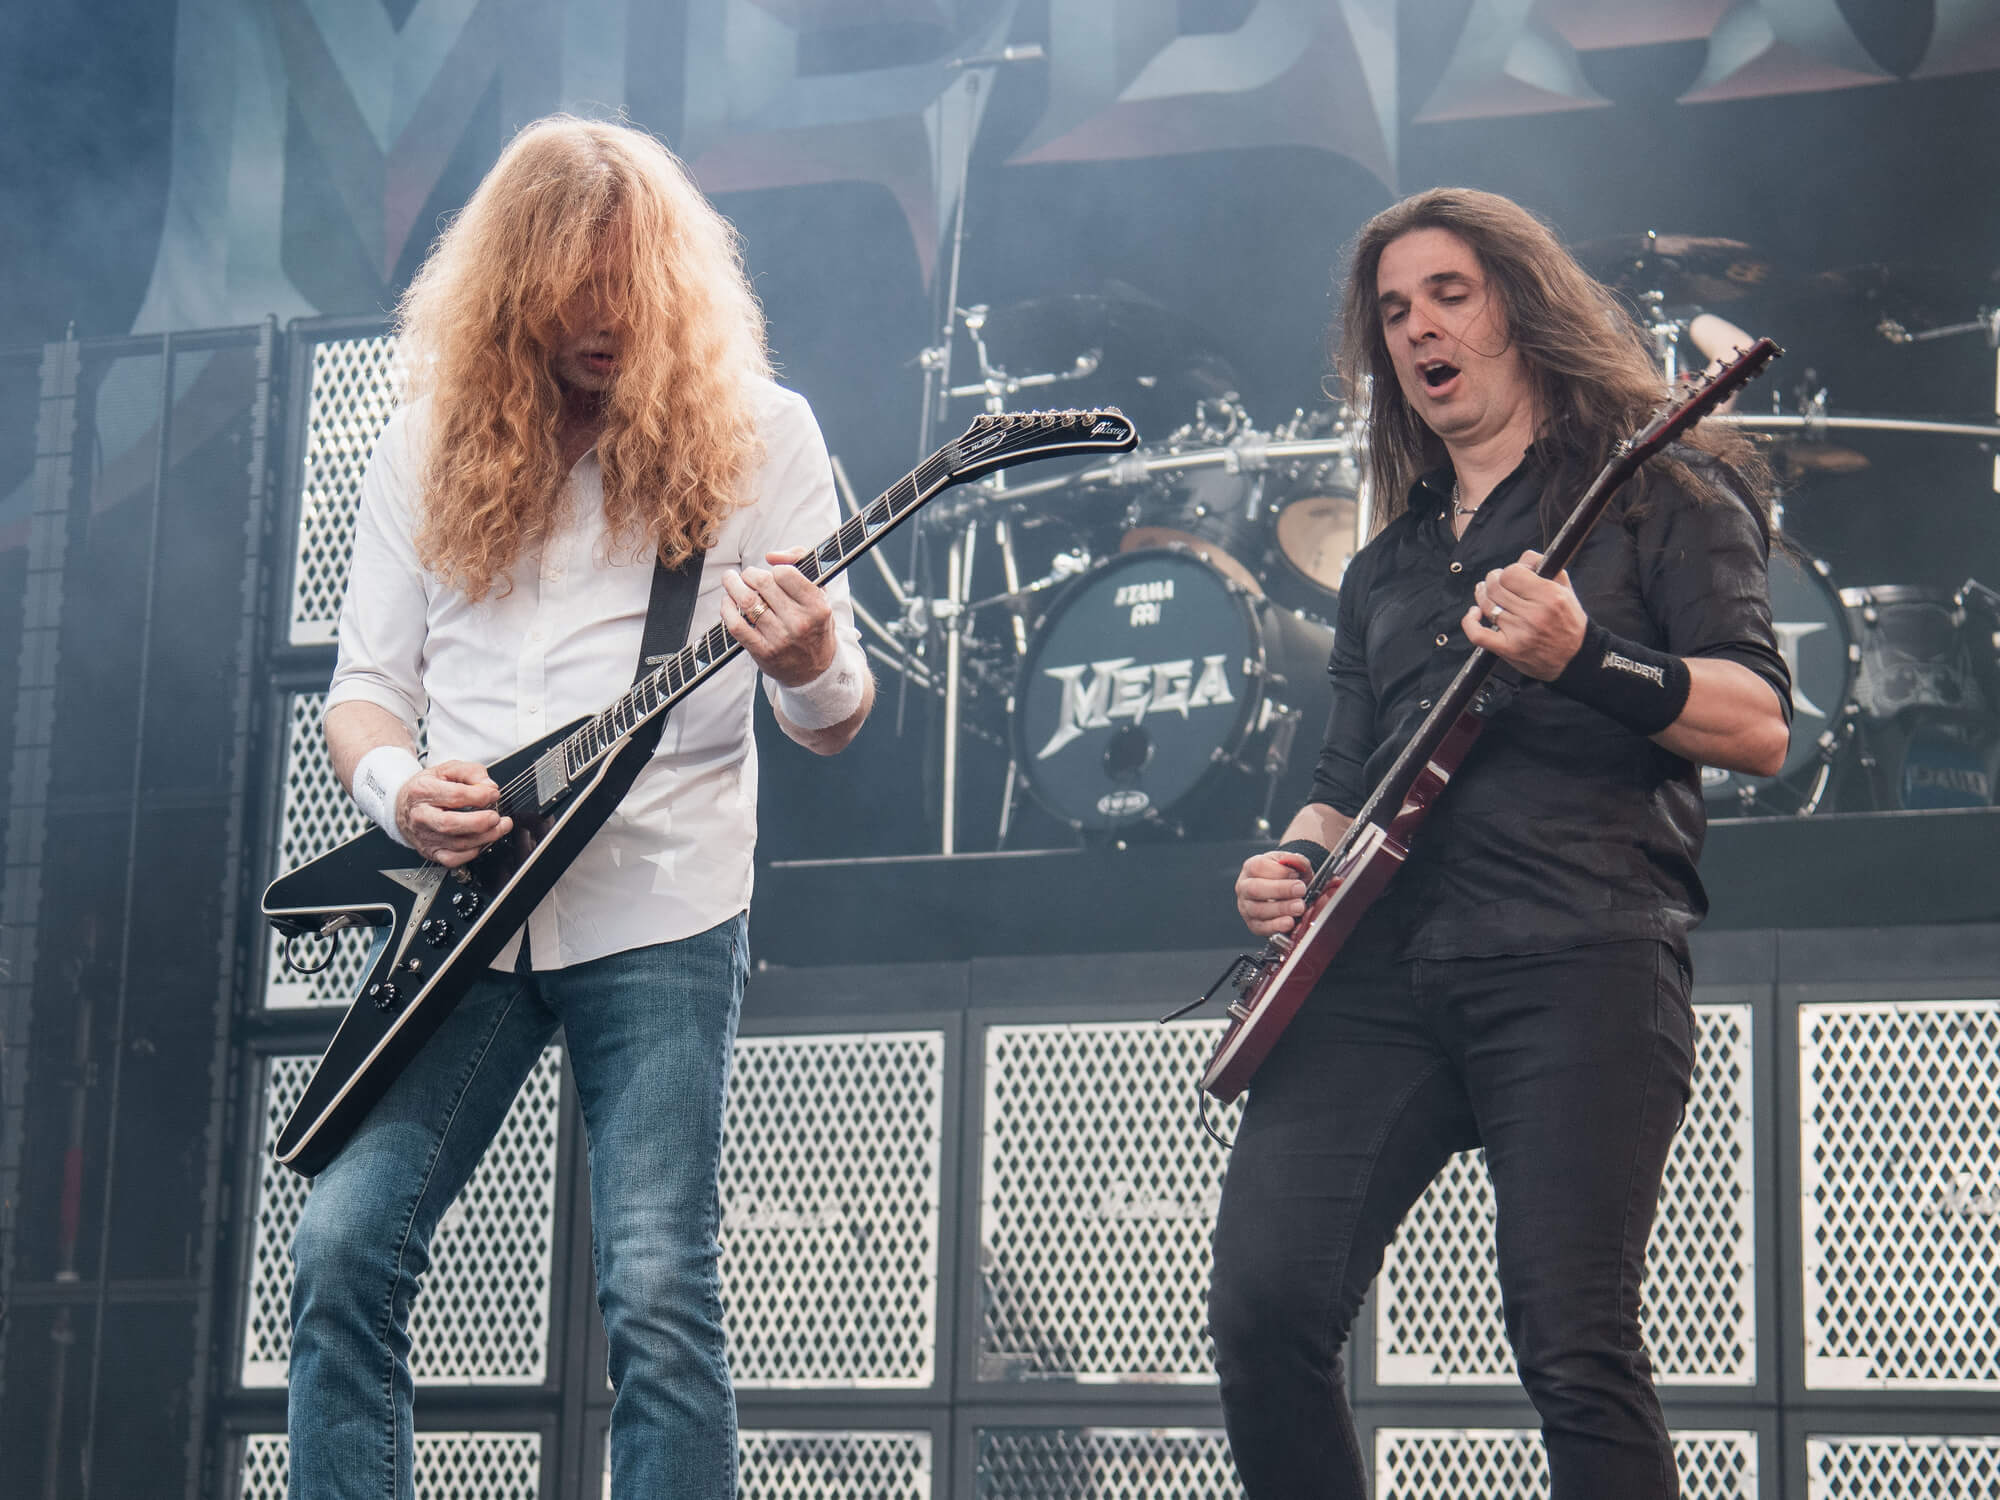 Dave Mustaine and Kiko Loureiro of Megadeth